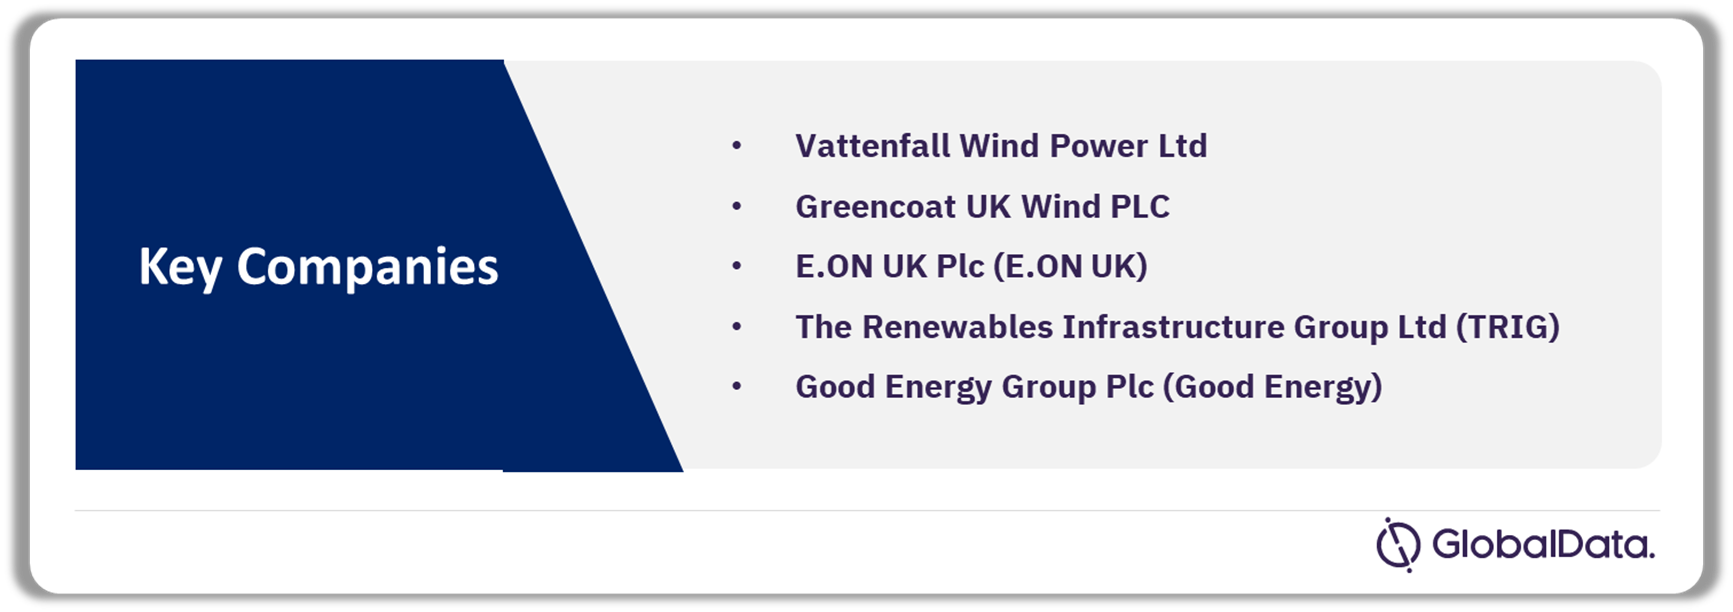 UK Wind Power Market Analysis by Companies